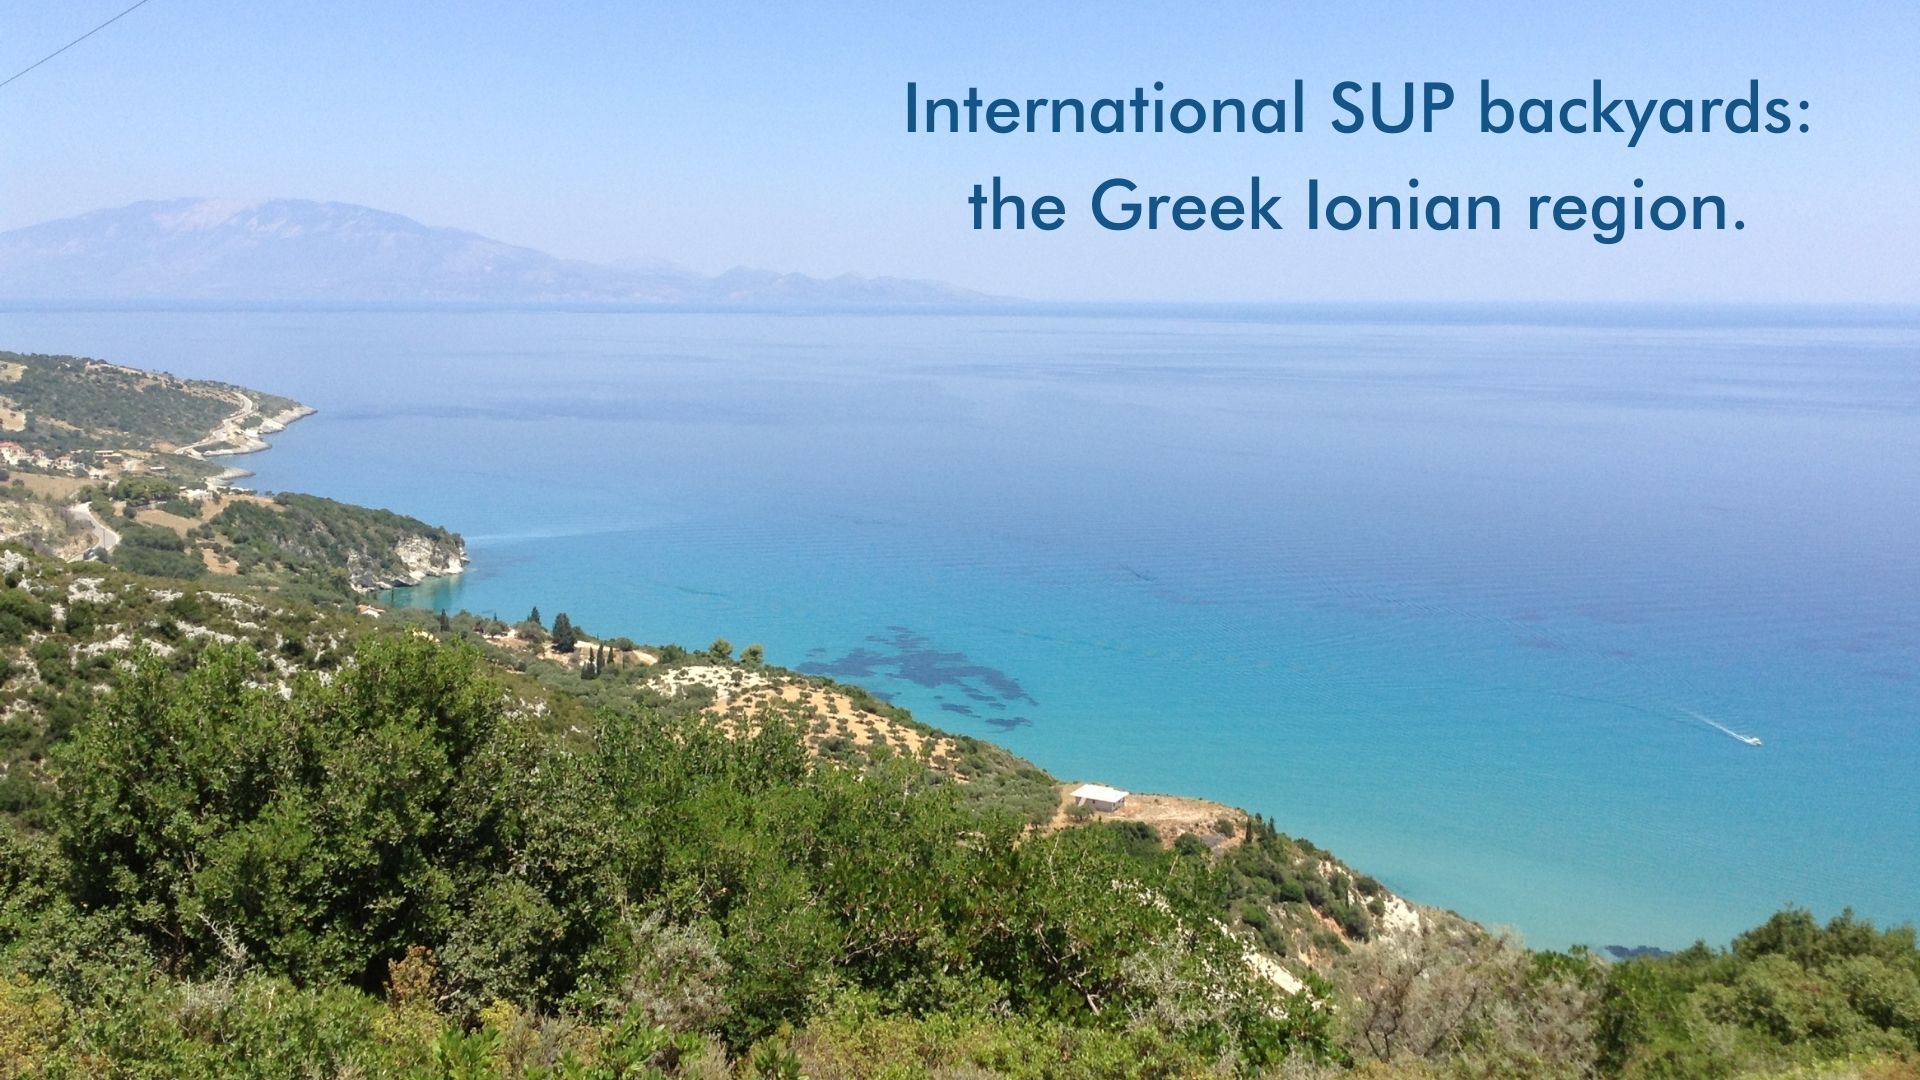 International SUP backyards the Greek Ionian region.